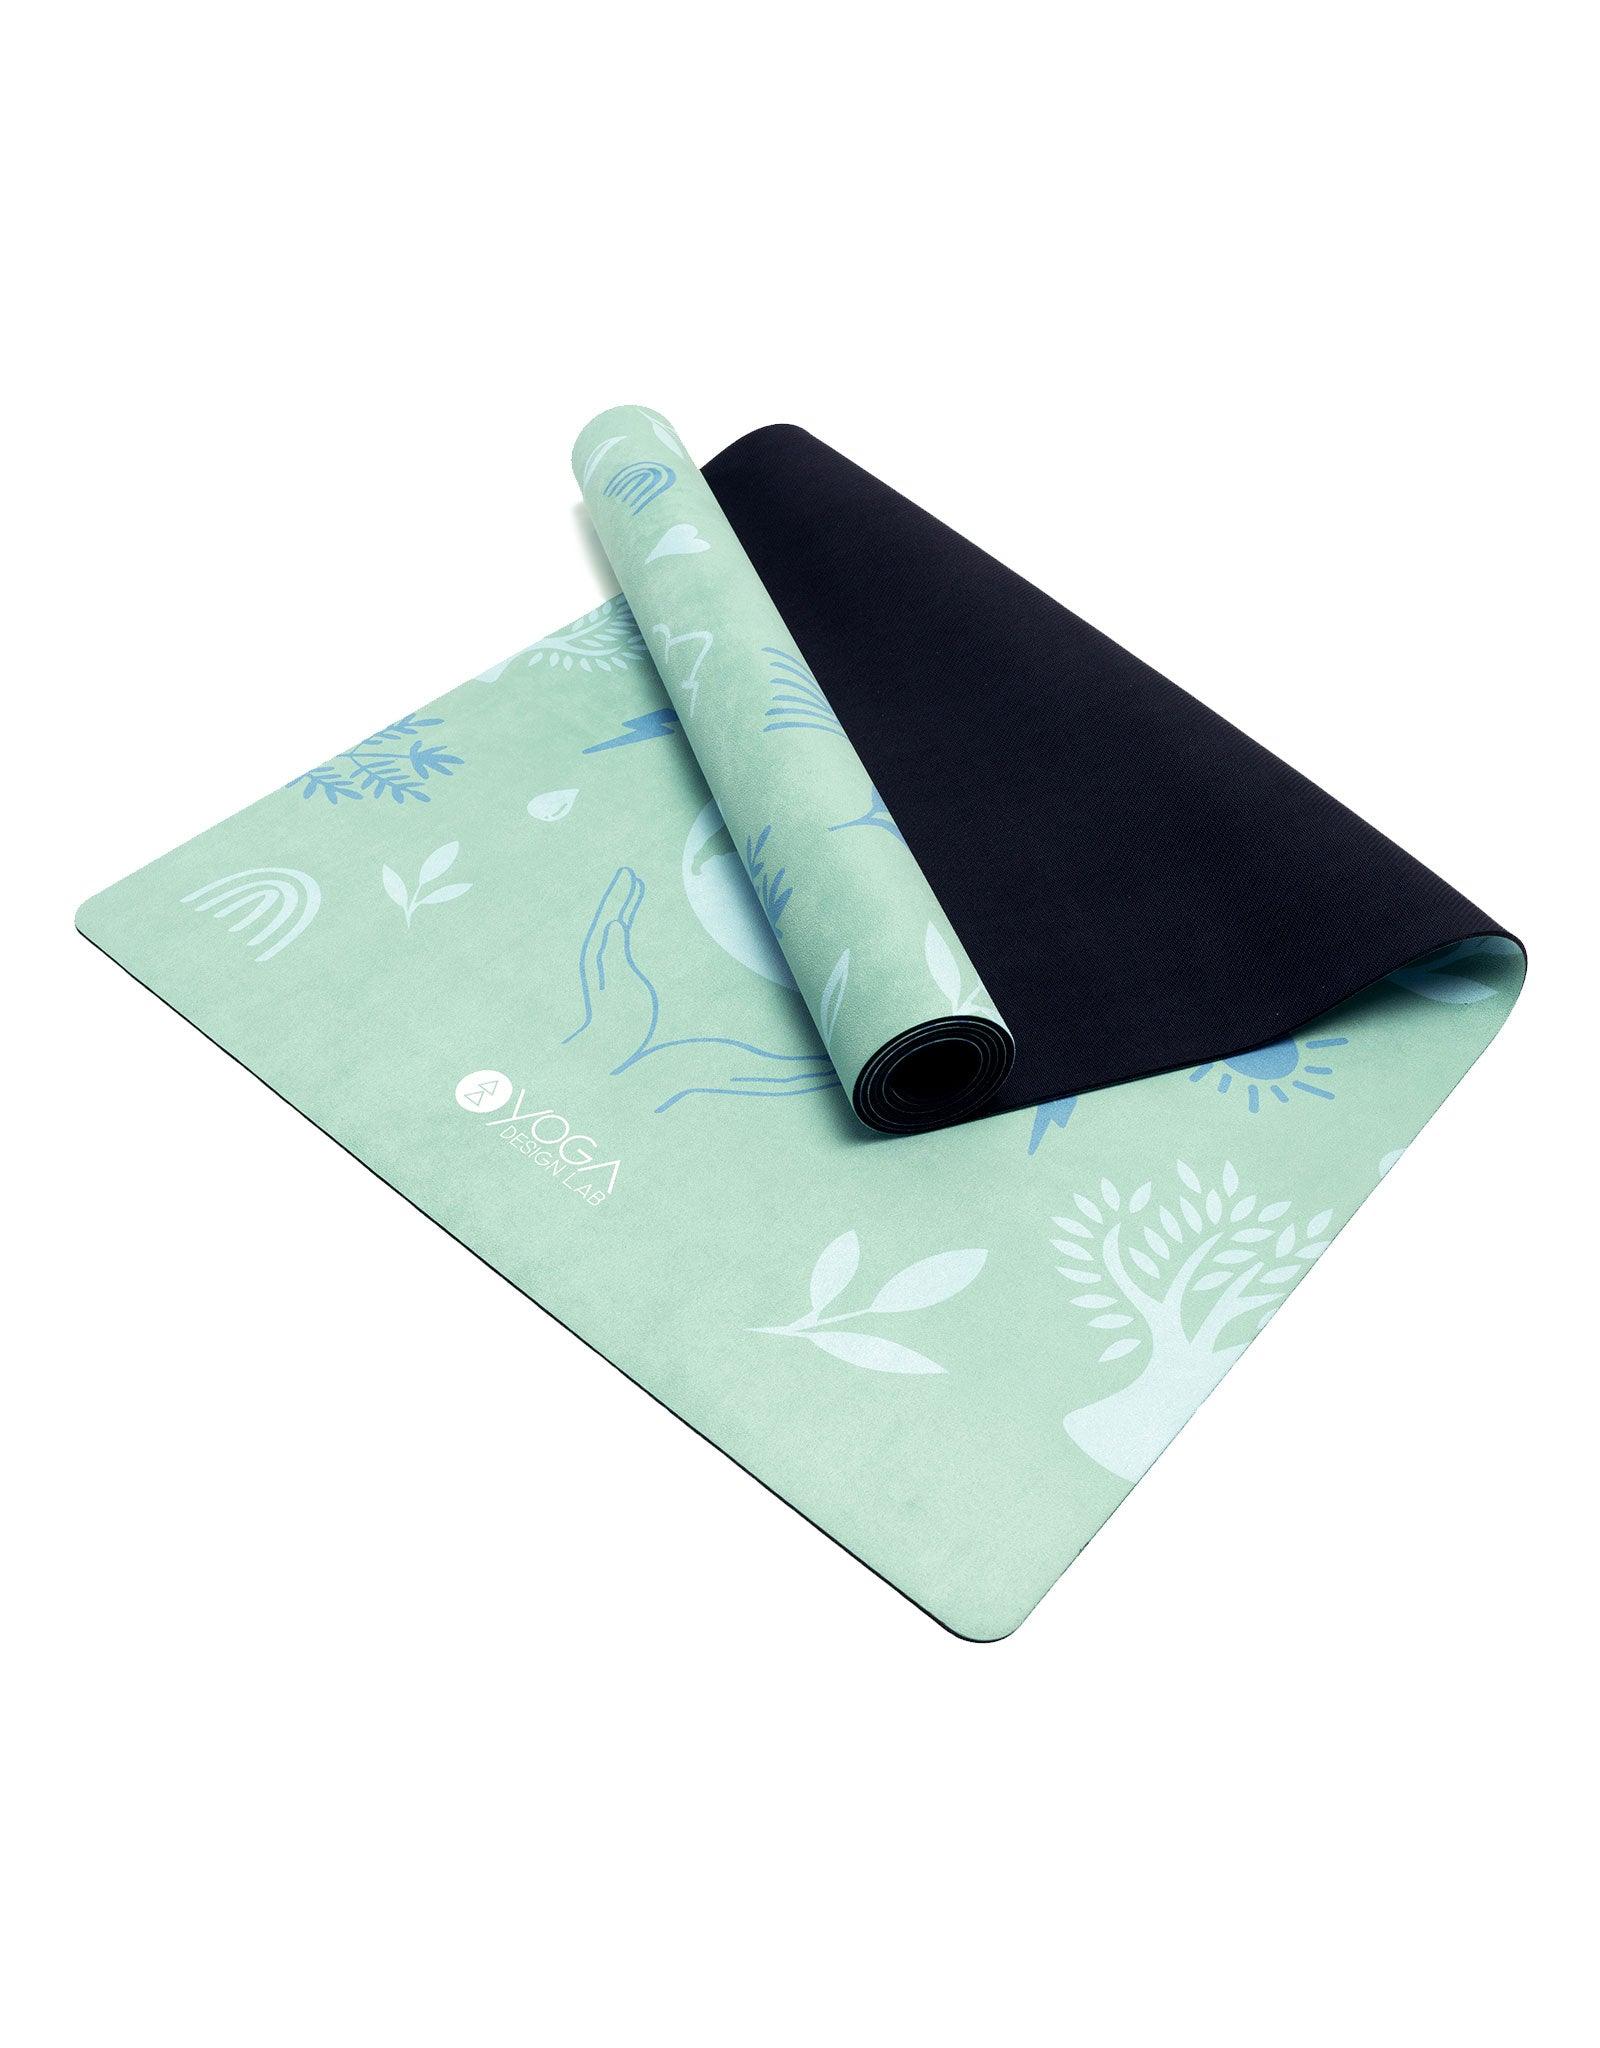 Yoga Design Lab - Combo Yoga Mat - 2-in-1 (Mat + Towel) - Earth Green -  Lightweight, Ultra-Soft